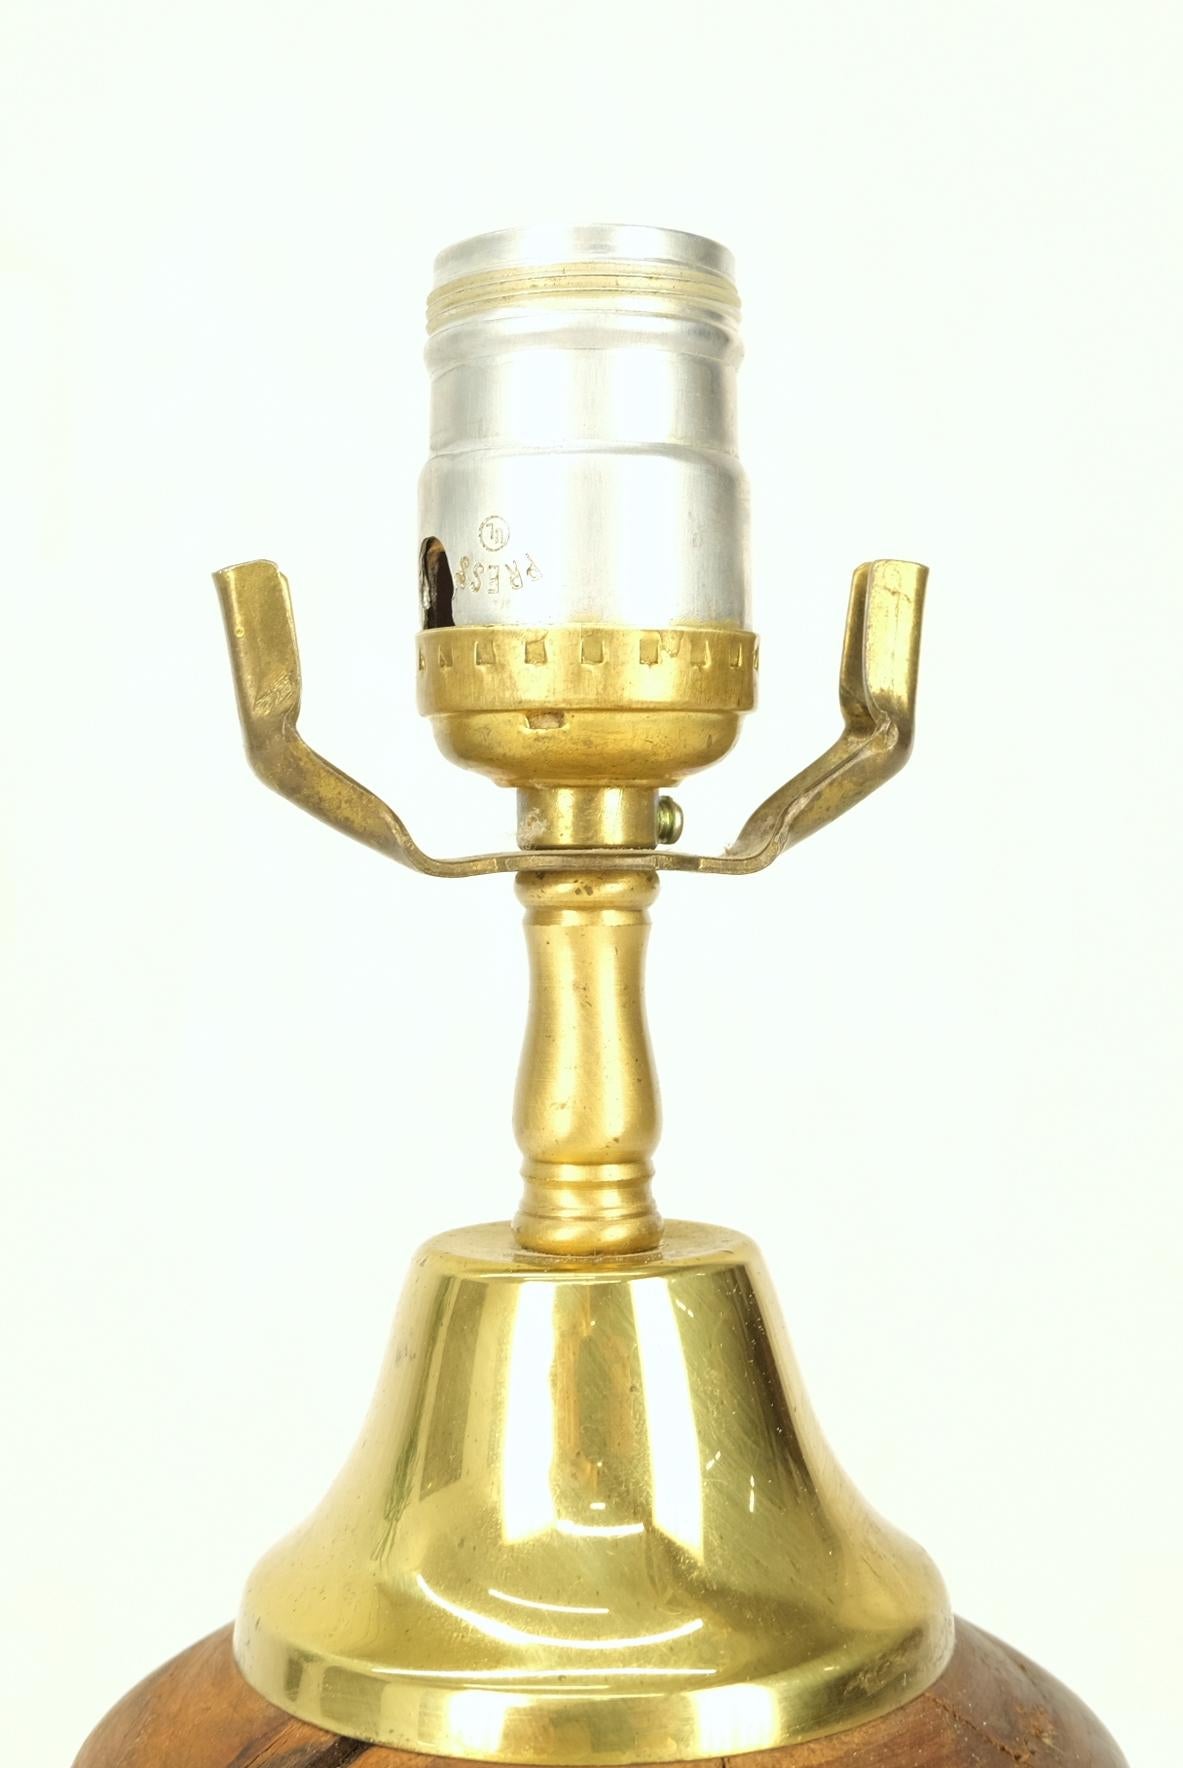 Turned Walnut or Teak Mid-Century Modern Table Lamp, c.1970s For Sale 1